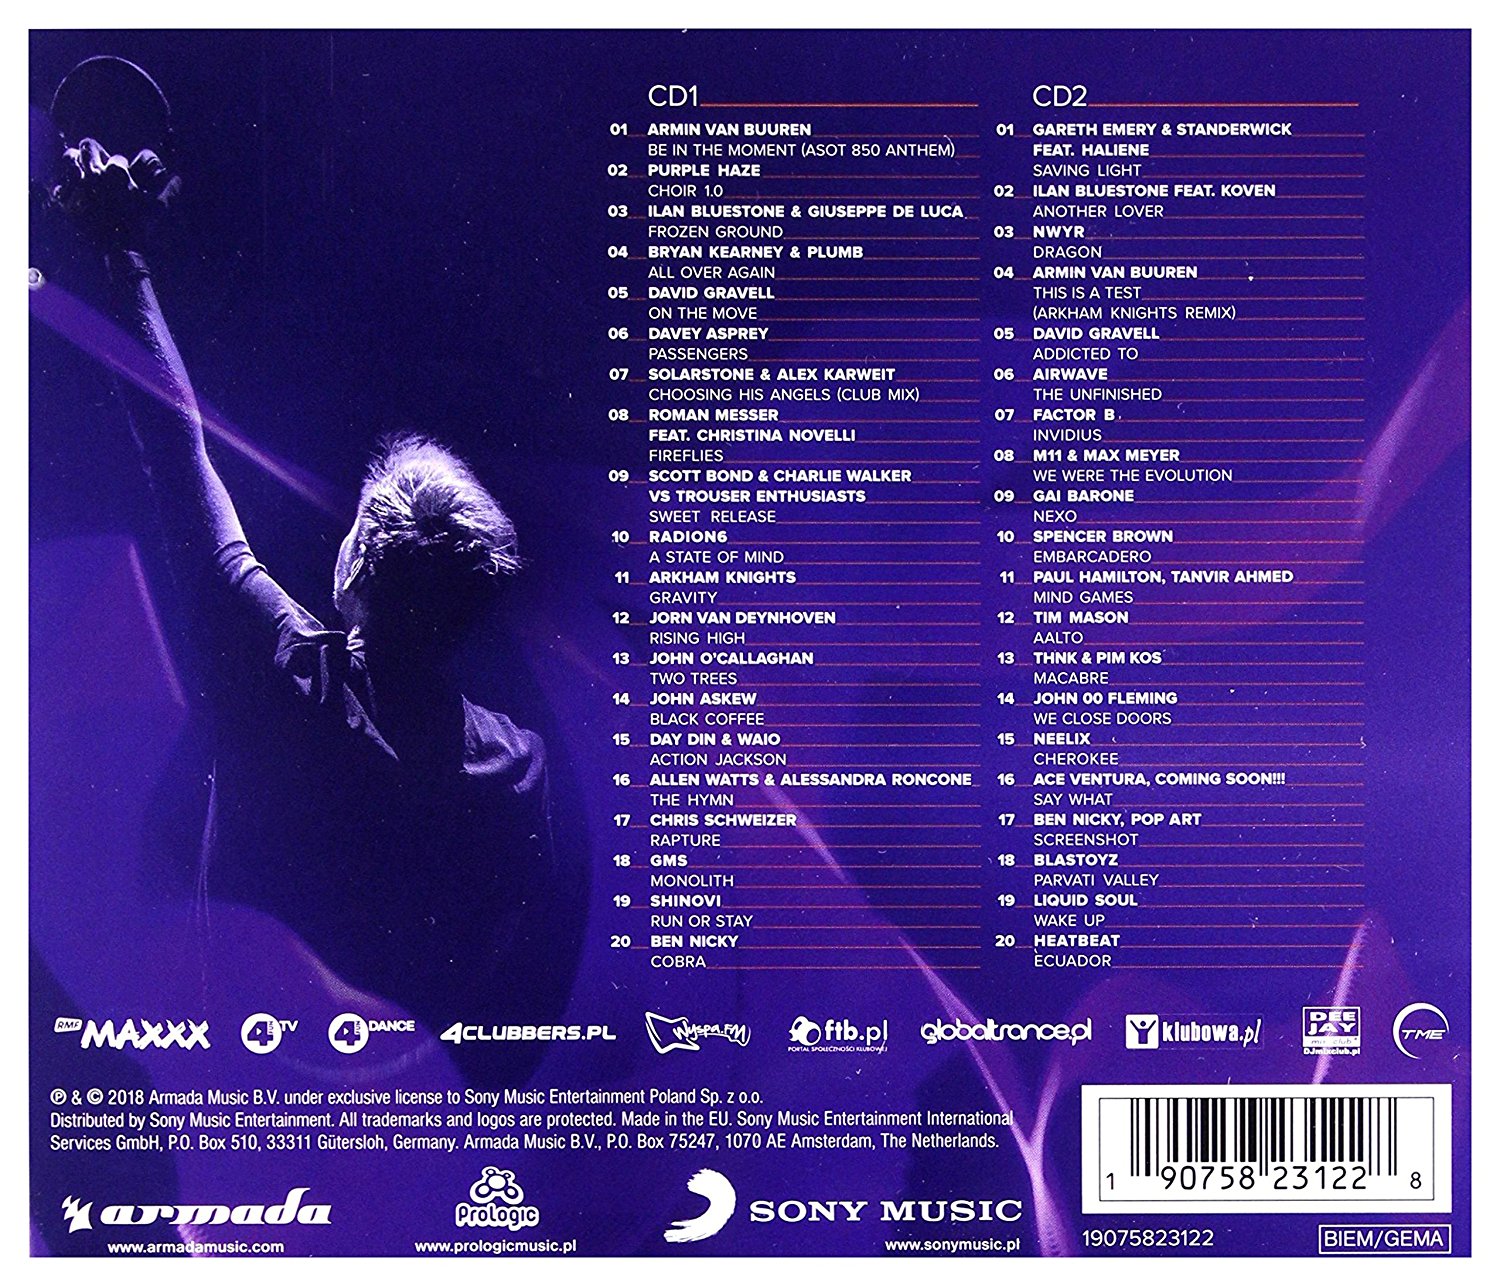 Trance перевод. A State of Trance CD. 001 A State of Trance cd1 (2000). Armin van Buuren 10 years. Cd2  2006. Trance selection 2009 Top 40 CD 2 обложка альбома каменная колонка.